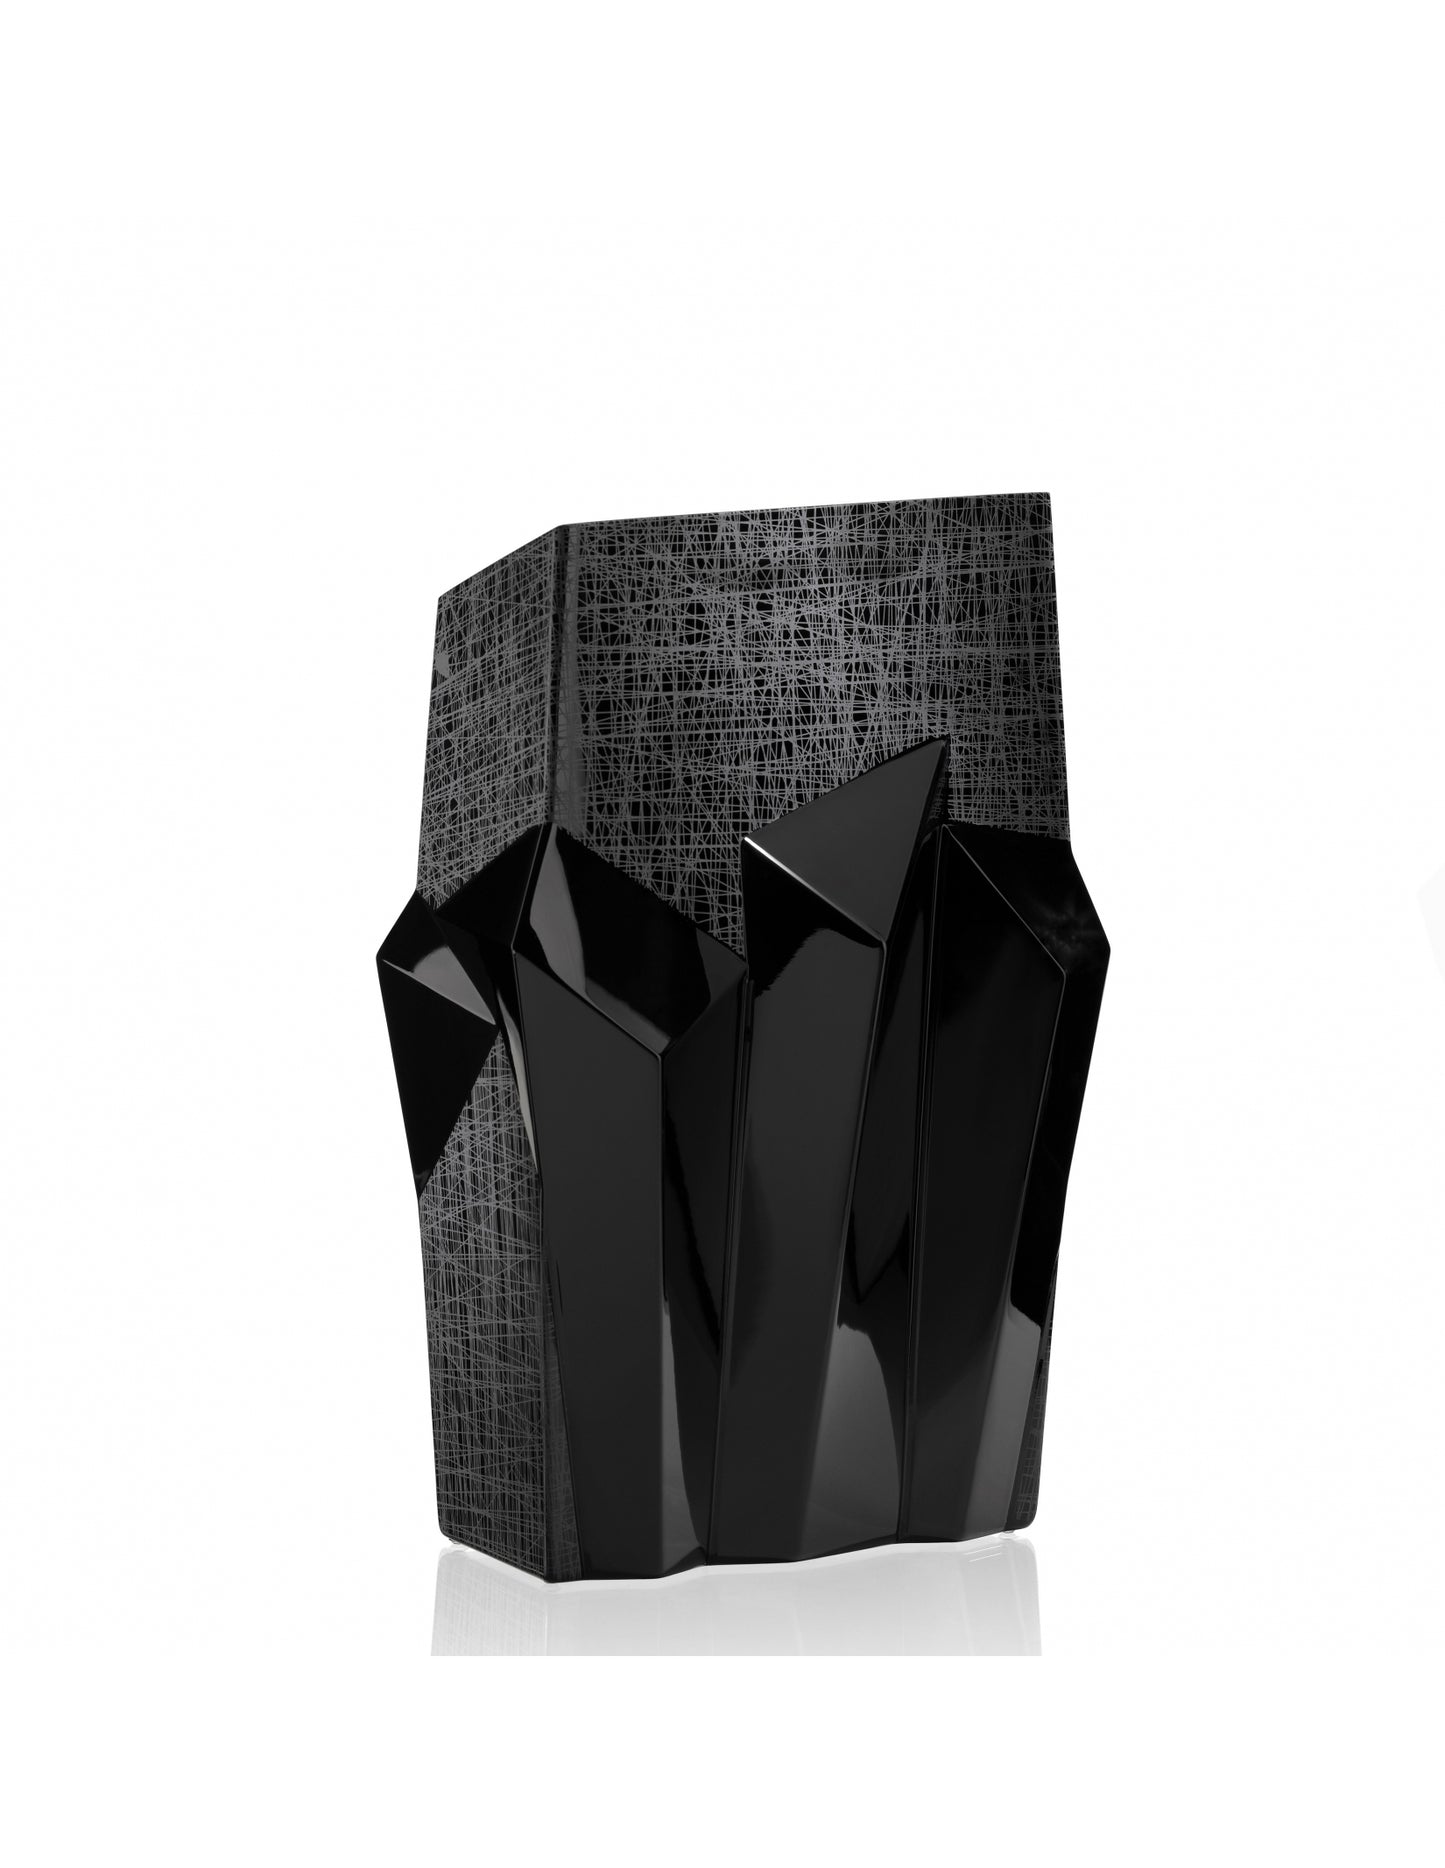 Metropolis limited edition  black vase